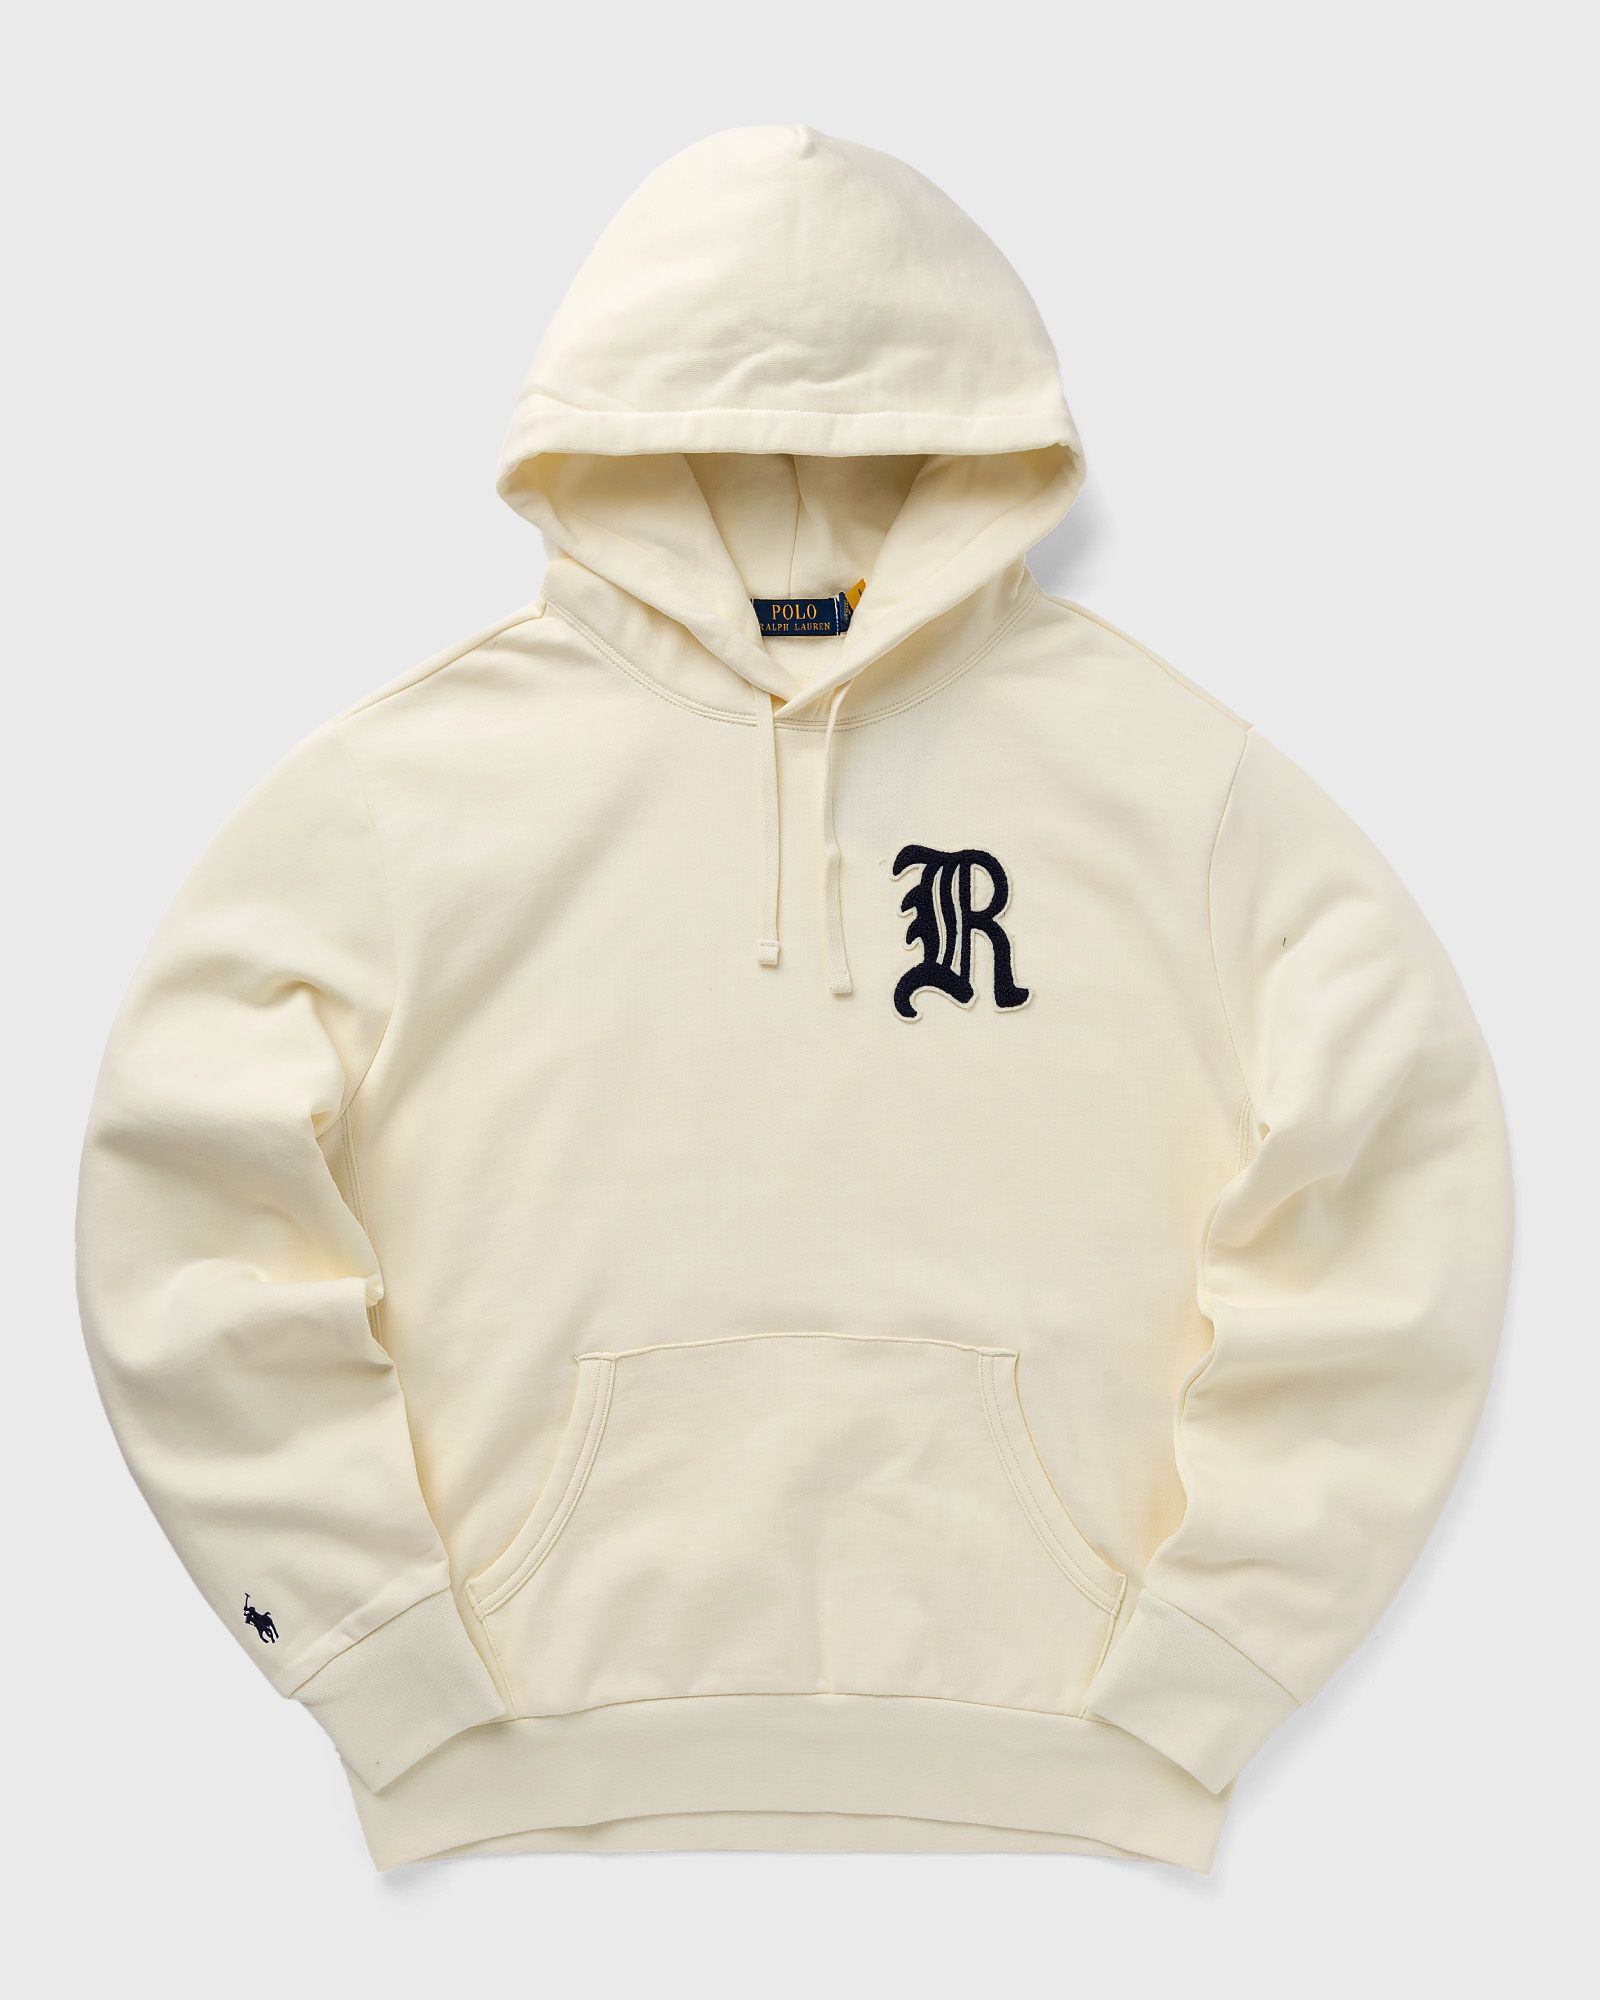 Polo Ralph Lauren - l/s hoody men hoodies beige in größe:m